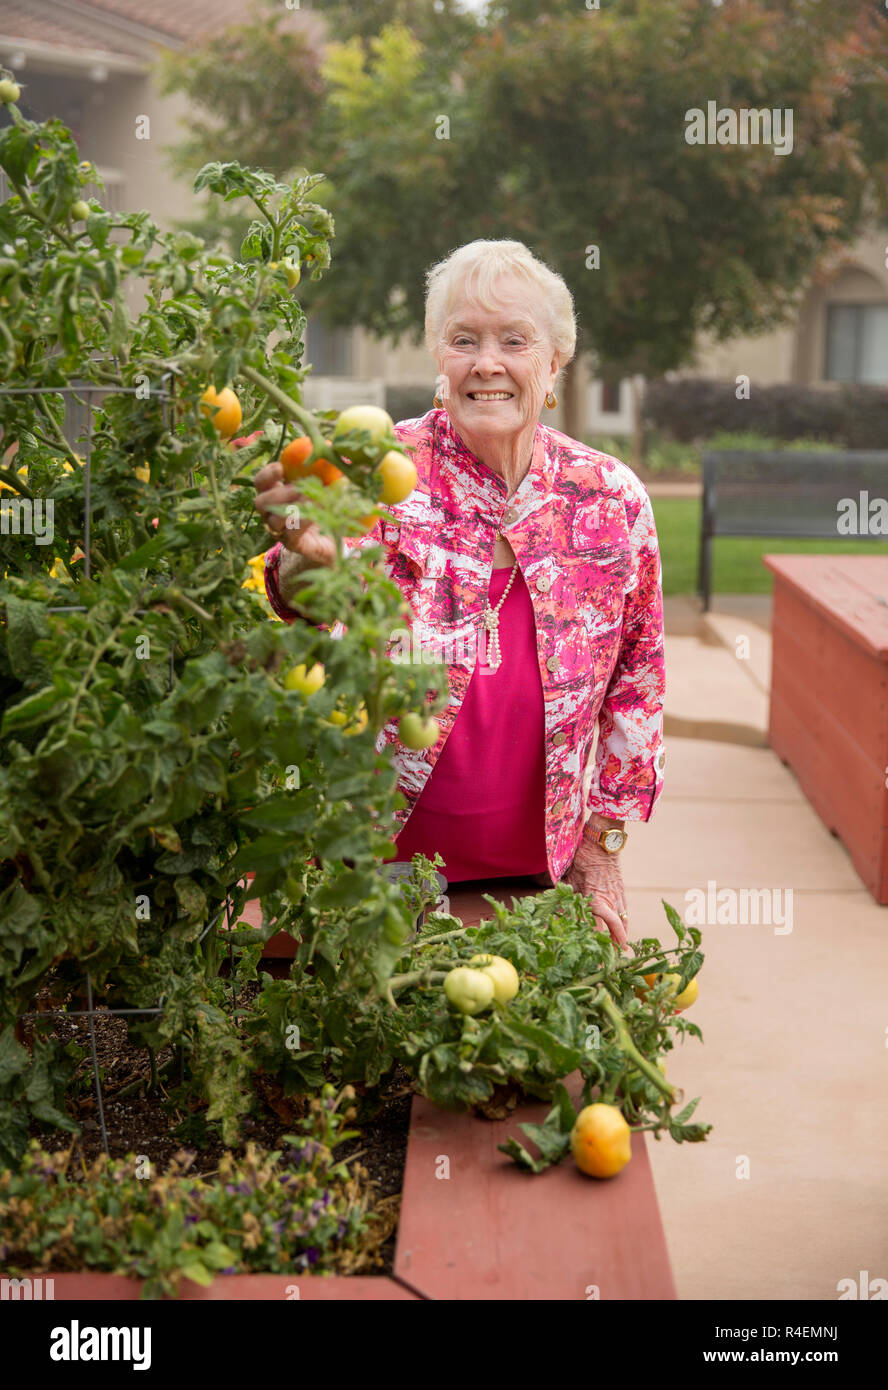 Senior Woman Admiring Tomatoes In Garden Stock Photo